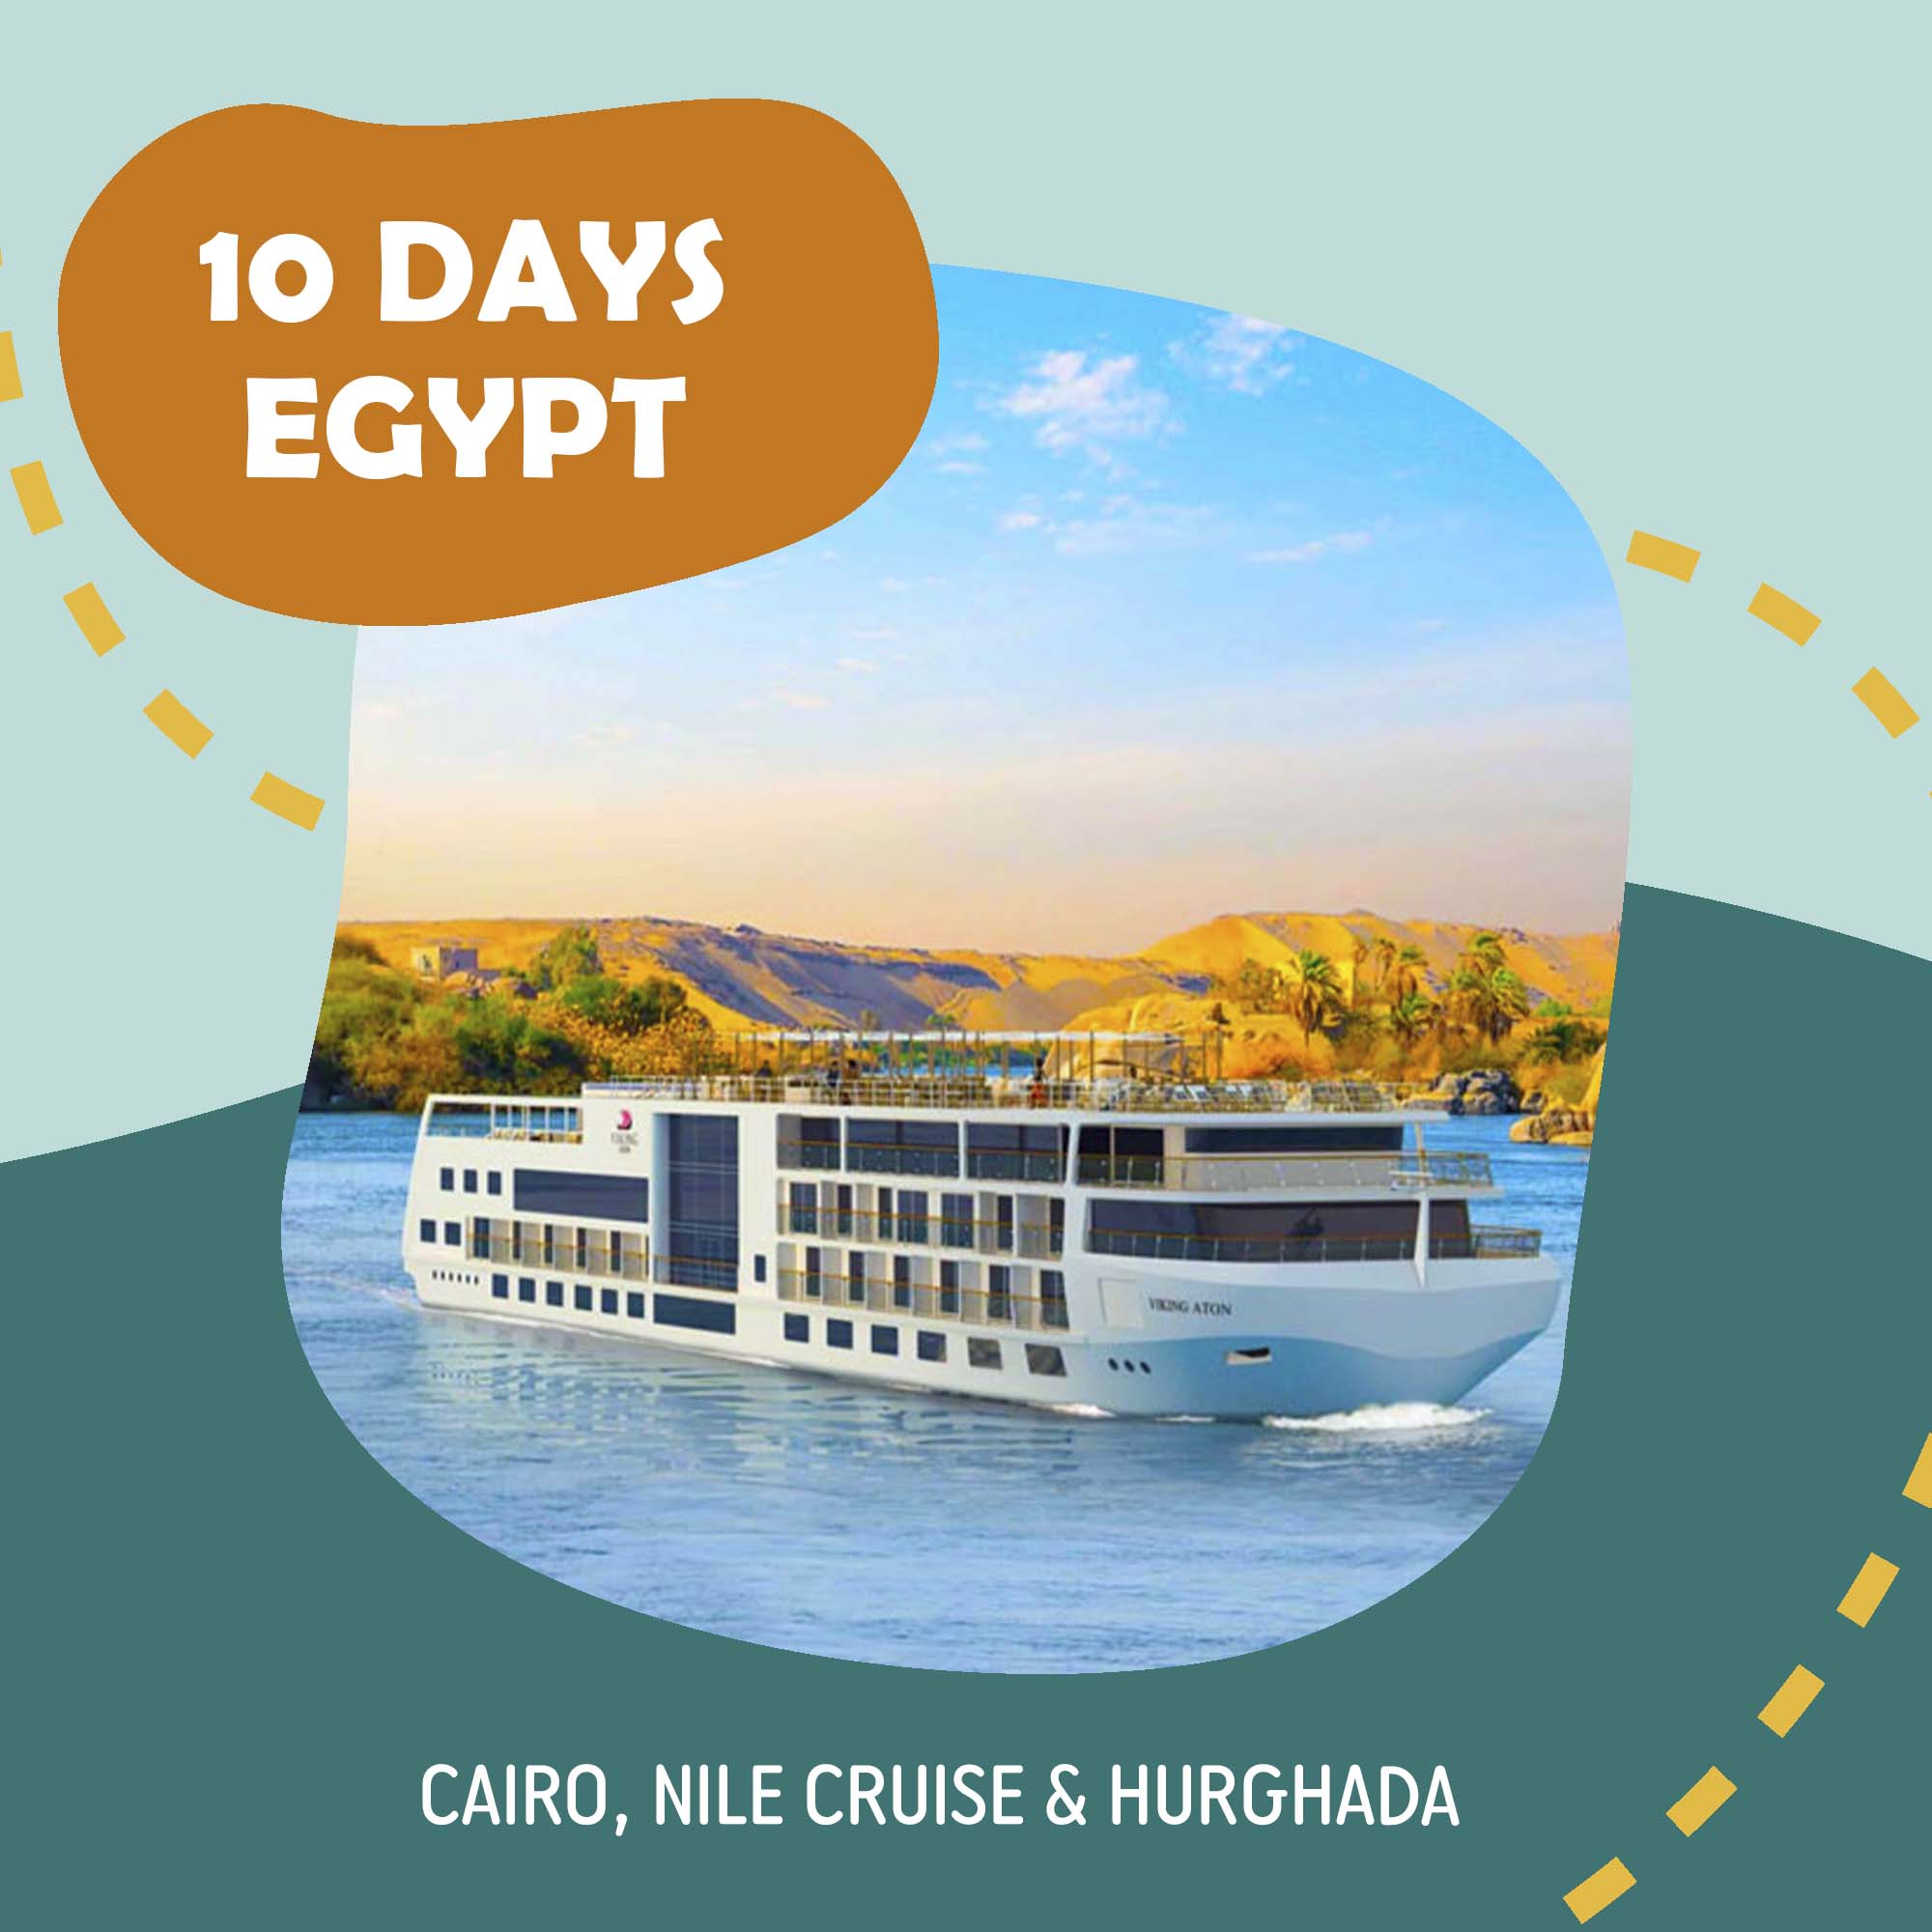 10 DAYS EGYPT CAIRO, NILE CRUISE & HURGHADA